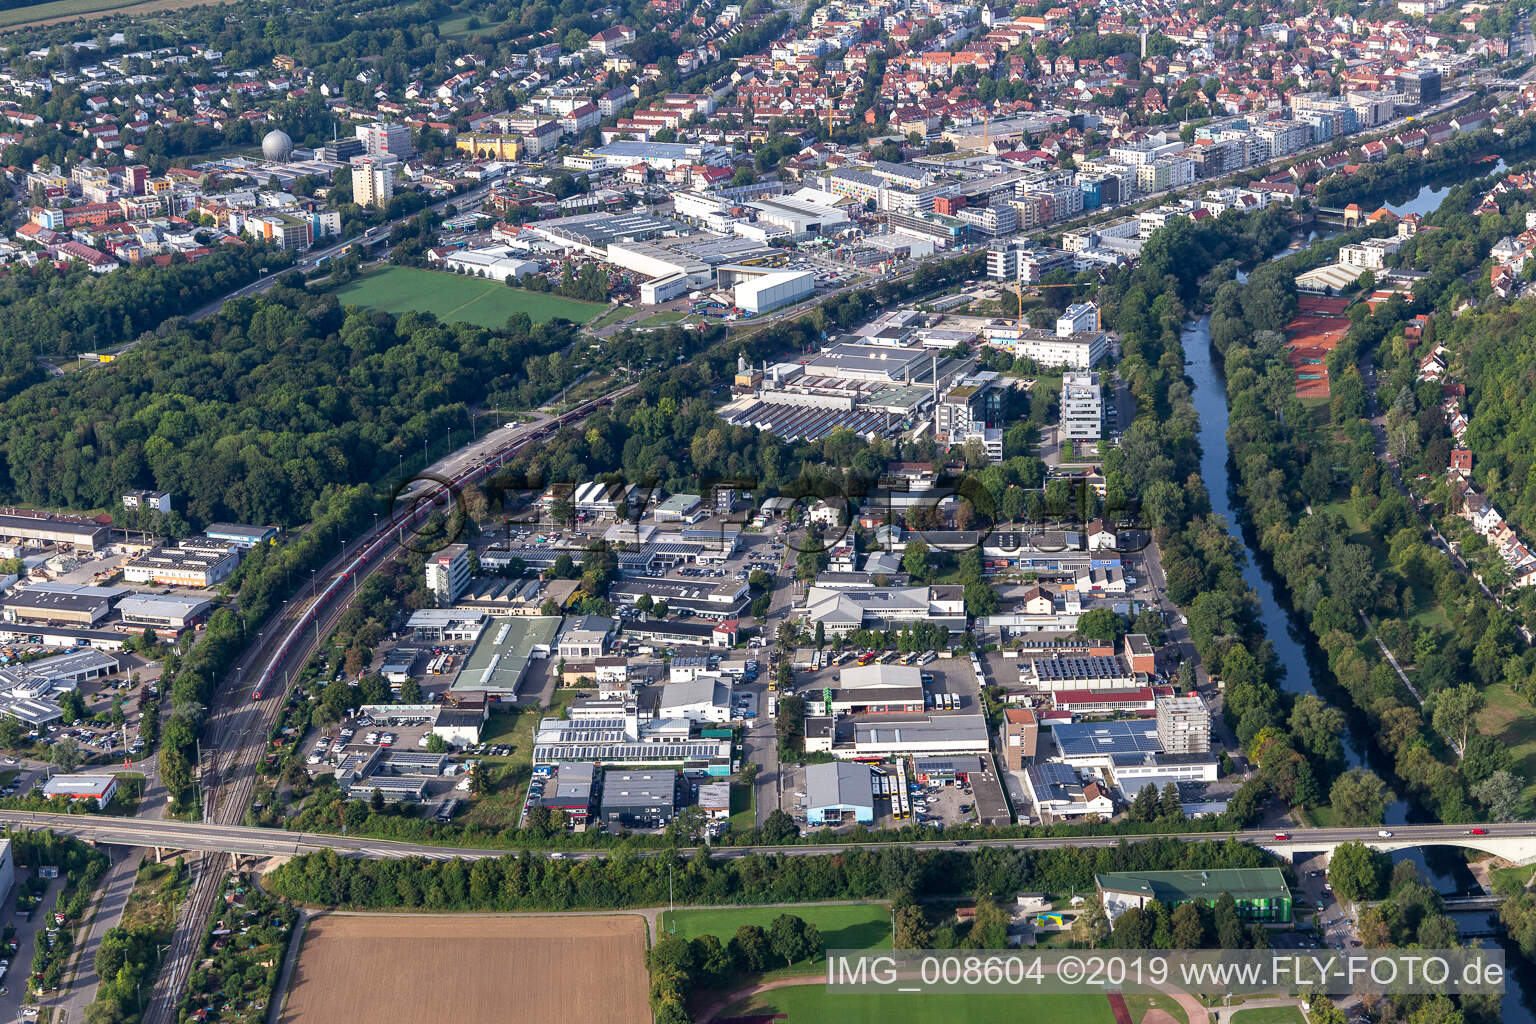 Industriegebiet August Bebel Straße in Tübingen im Bundesland Baden-Württemberg, Deutschland